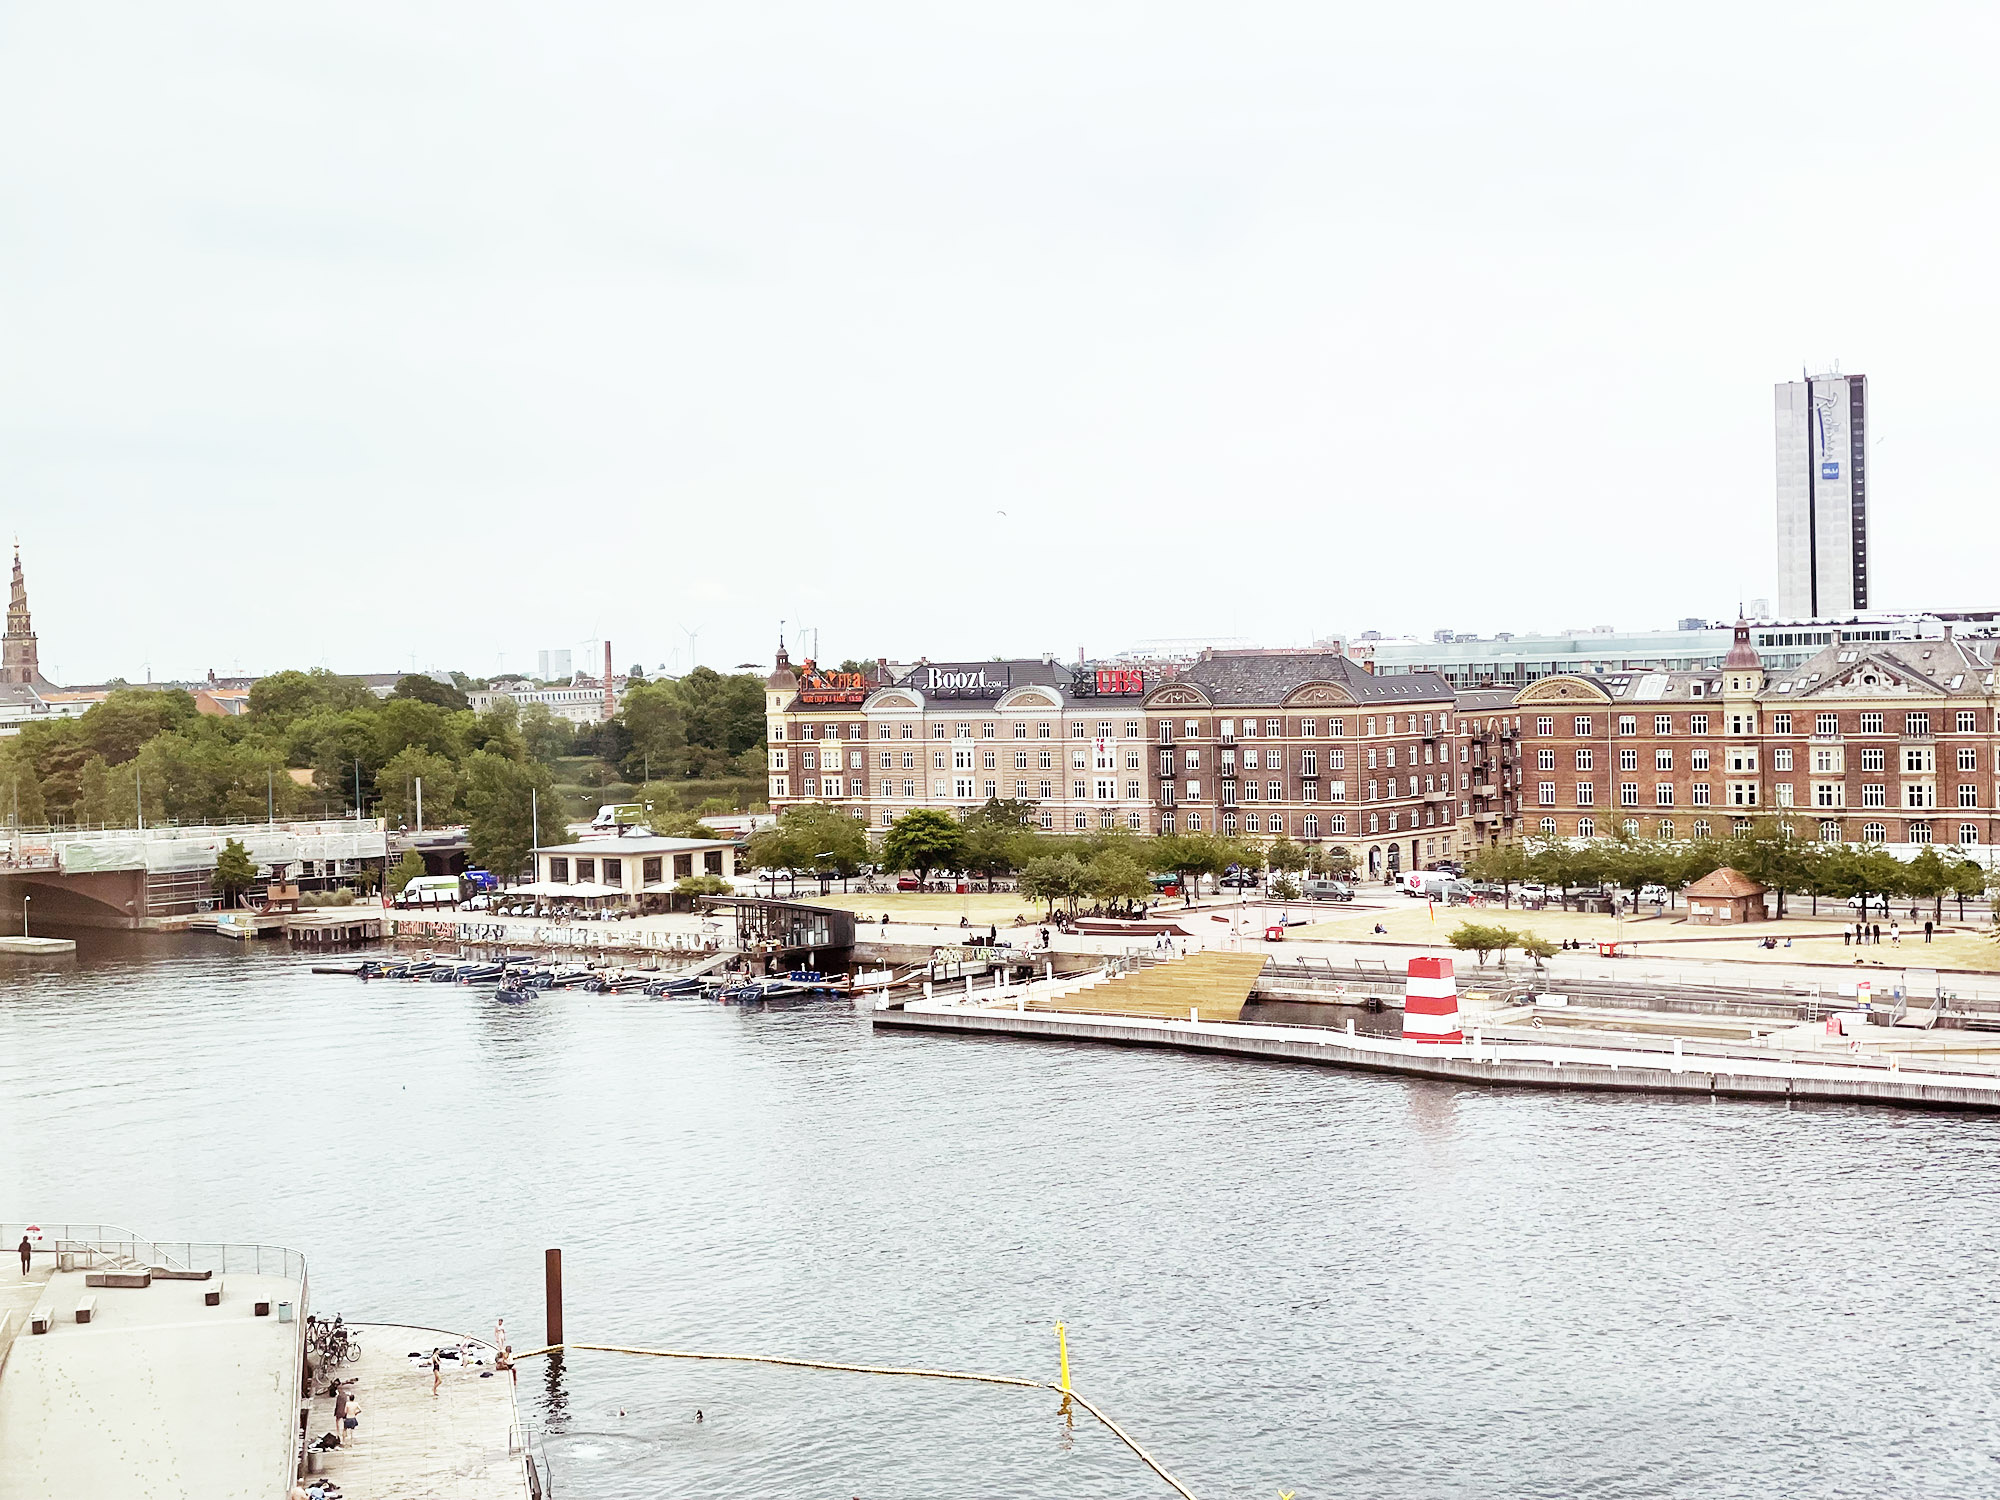 Rent a picnic boat, Copenhagen Guide